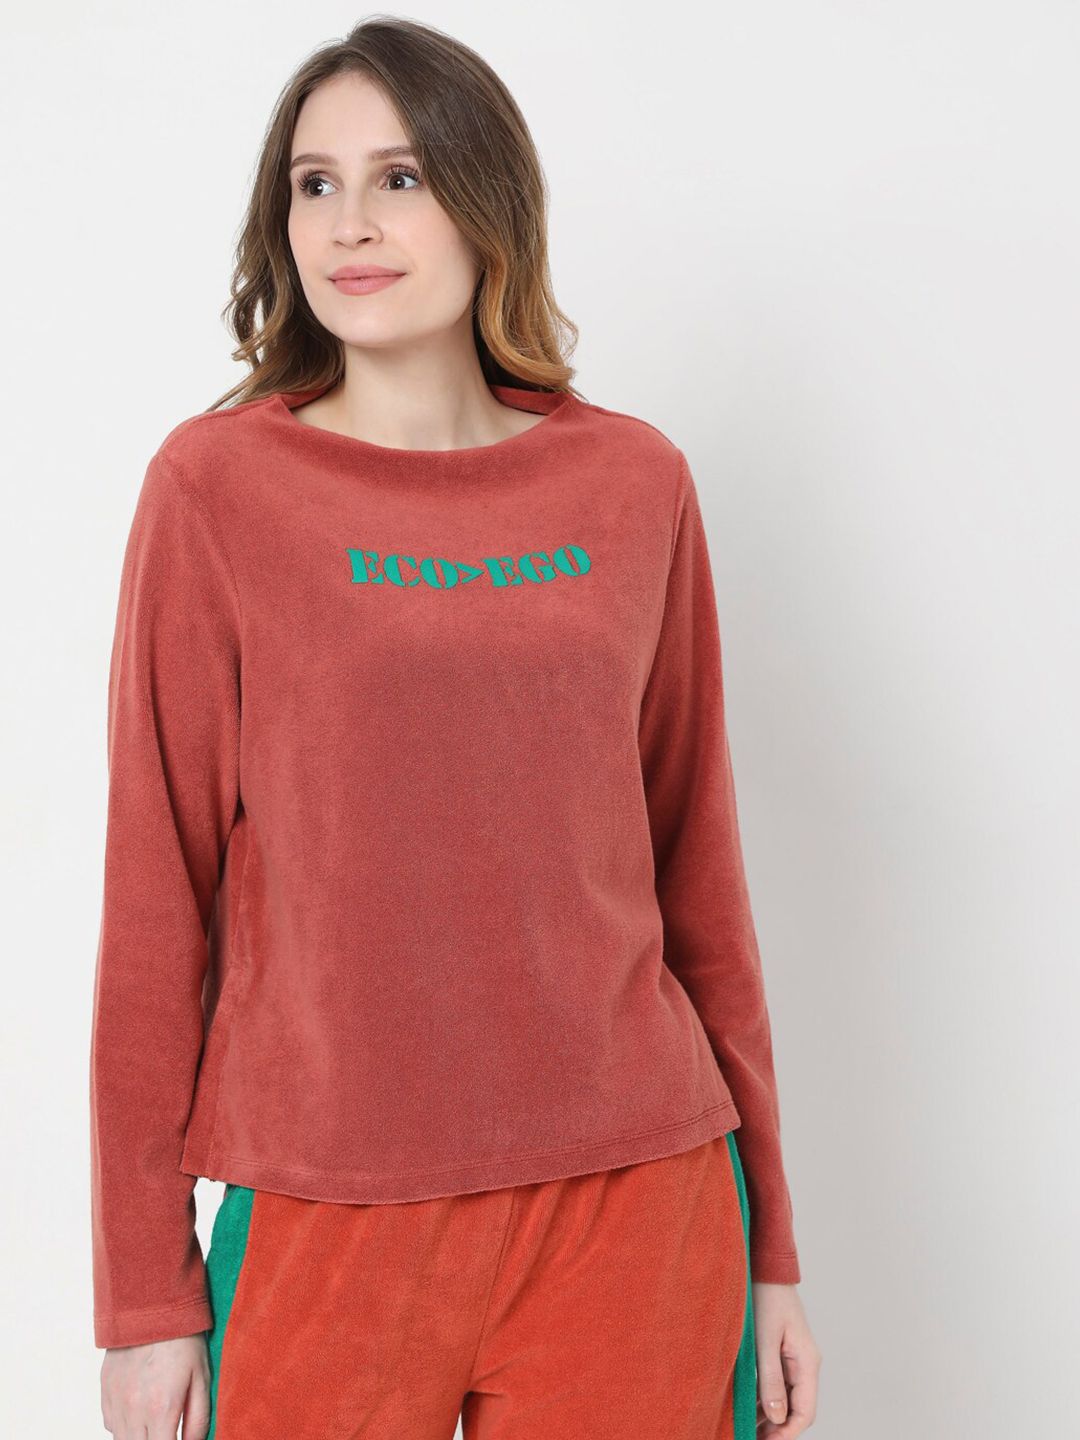 Vero Moda Women Maroon Printed Sweatshirt Price in India